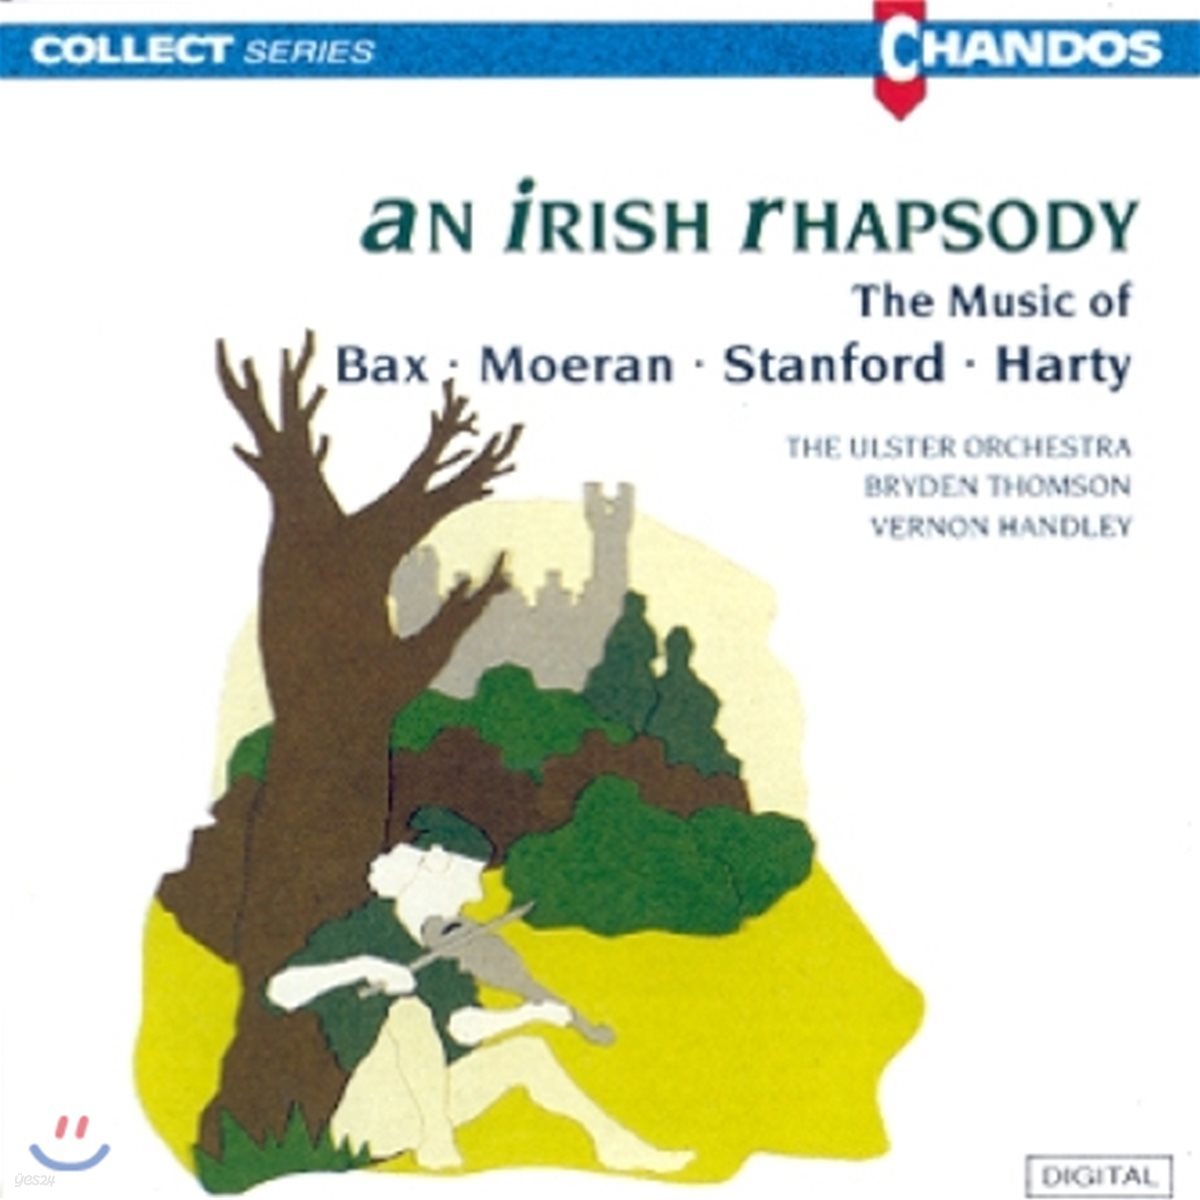 Vernon Handley 아일랜드 광시곡: 하티 / 스탠포드 / 백스 / 모런 - 울스터 오케스트라, 버논 핸들리 (An Irish Rapsody: The Music of Bax / Moeran / Harty / Stanford)